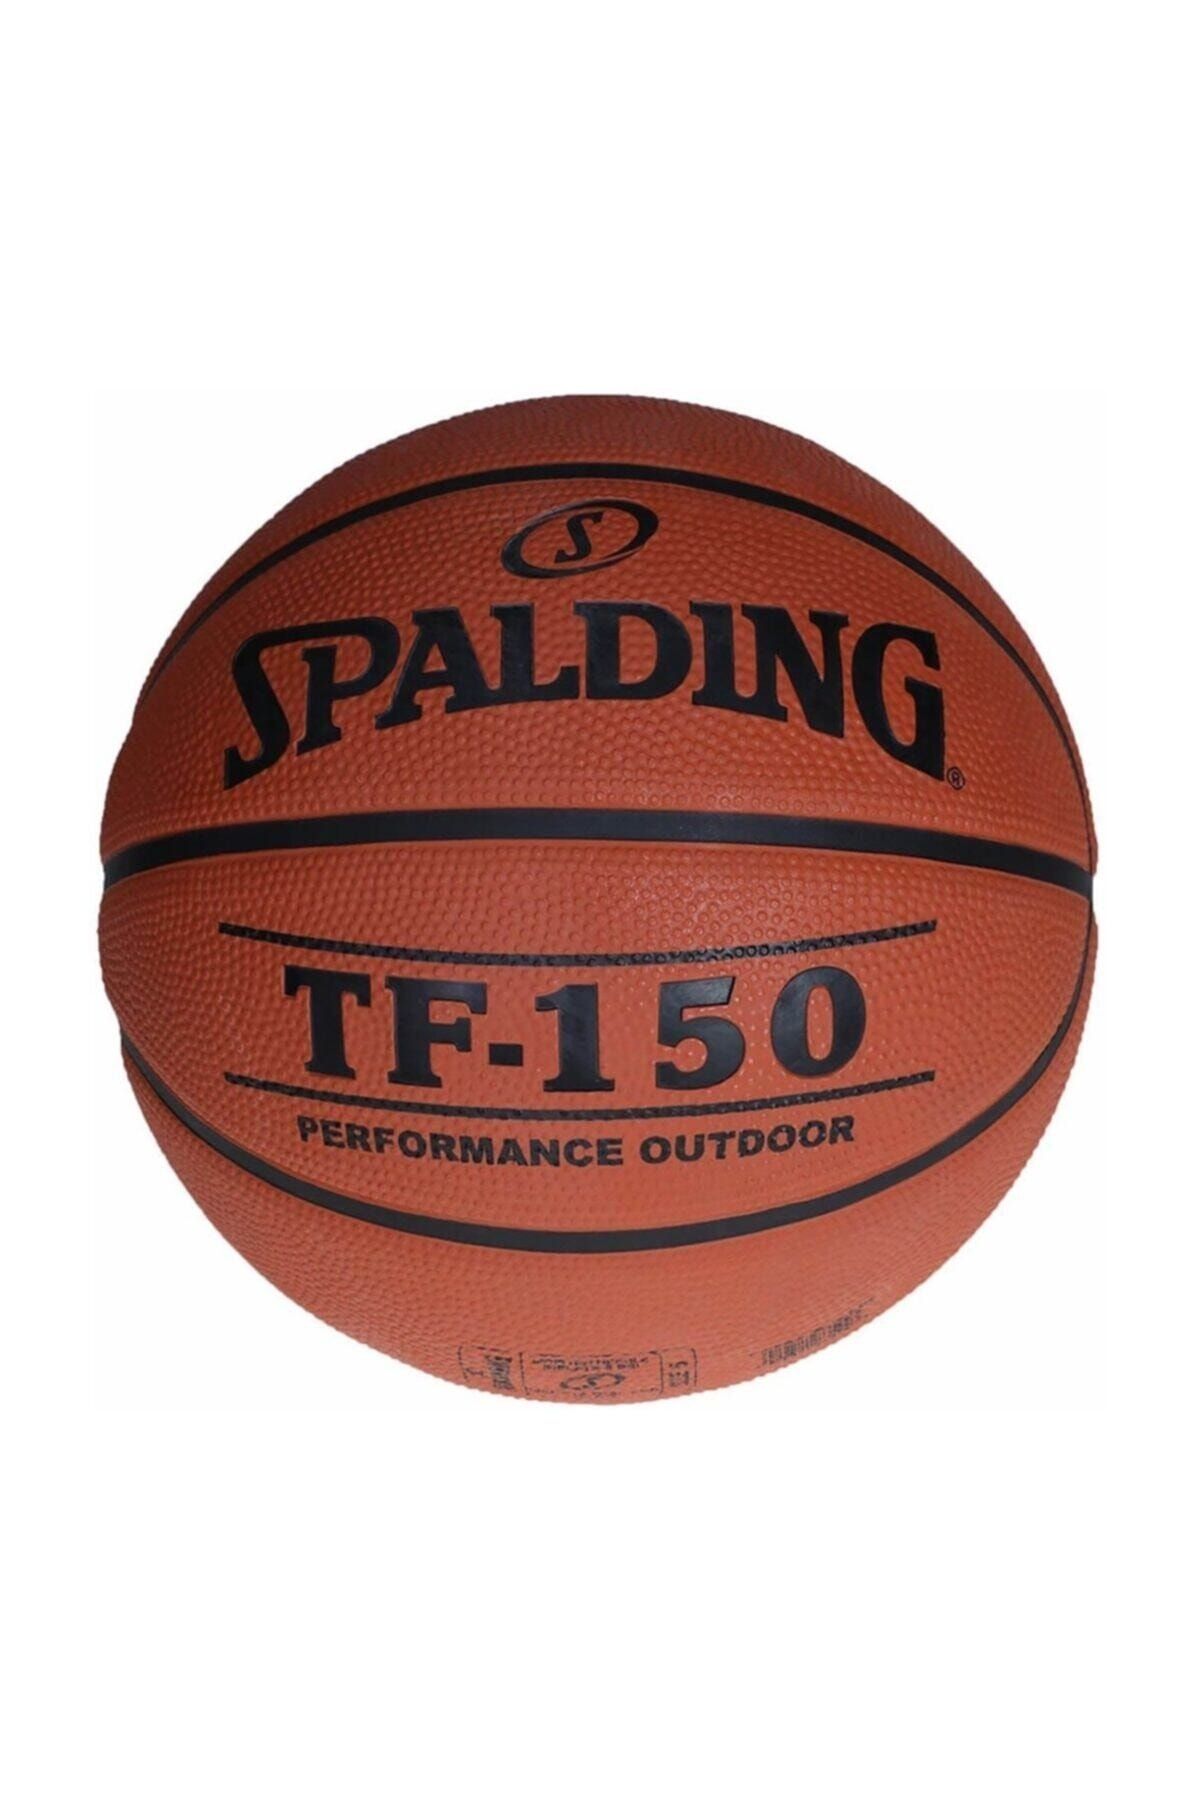 Spalding Tf-150 Performance Fiba Basketbol Topu No:5 Üye